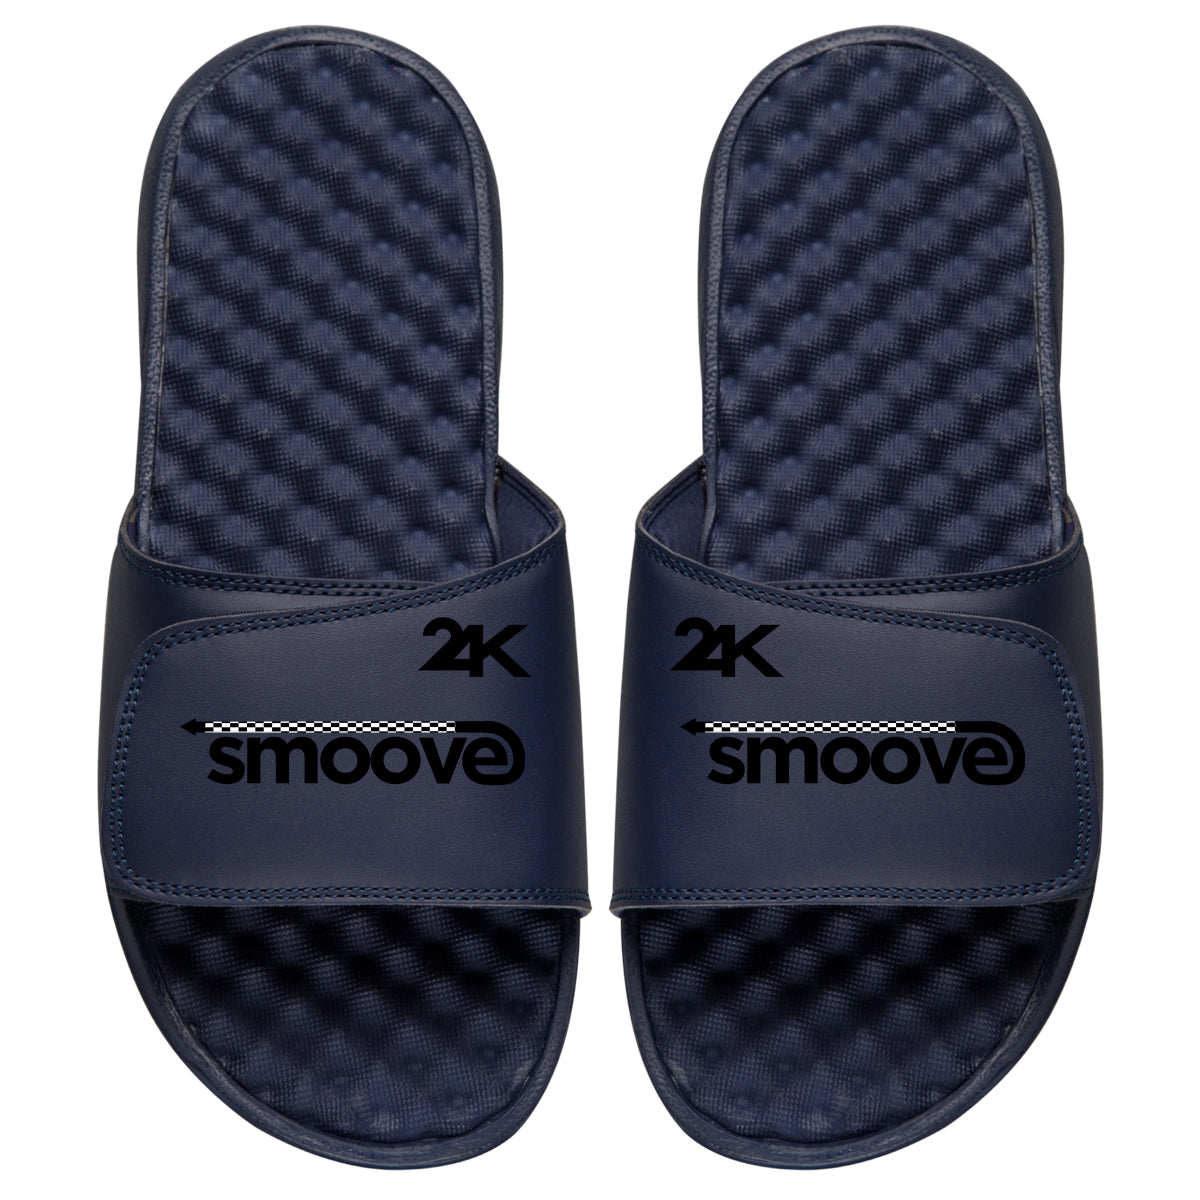 Smoove 24K Slides